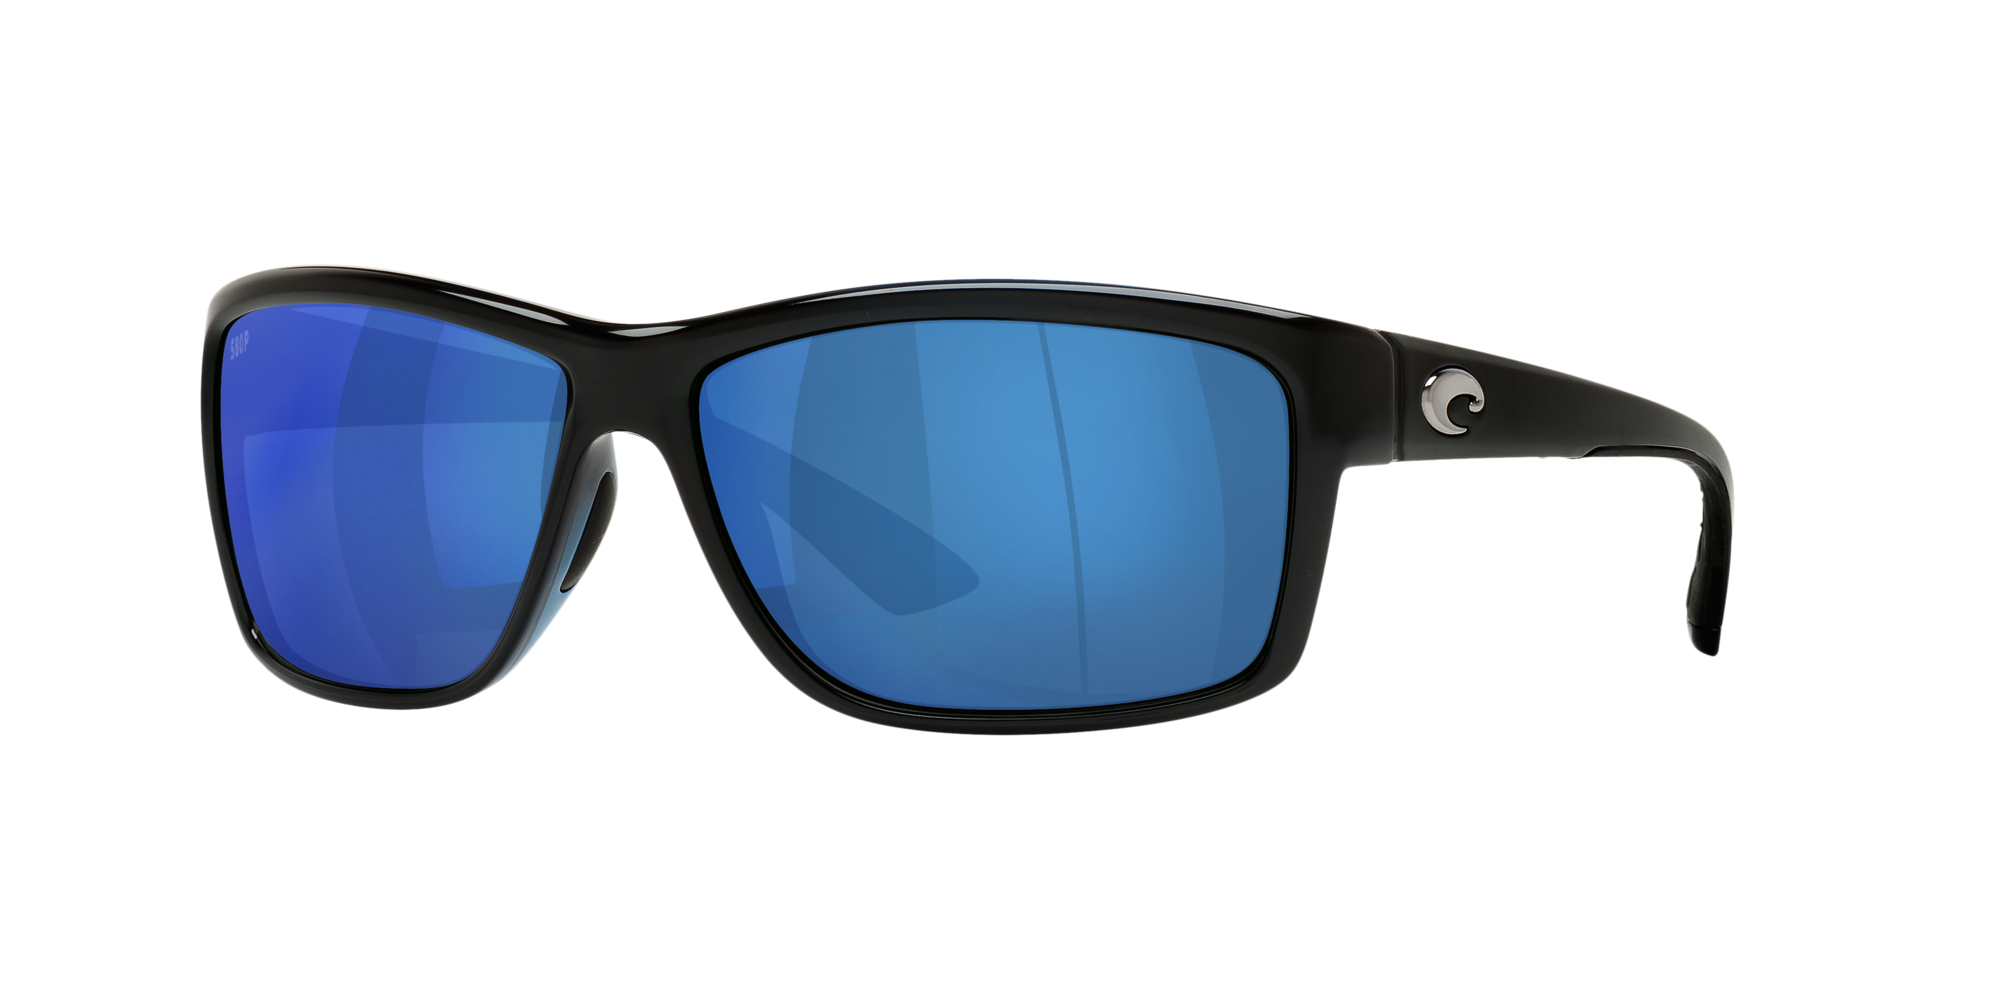 Costa Del Mar Mag bay AA Tortoise Sunglasses Costa Del Mar Mag Bay Sunglasses Blue Mirror 580P Lens Pro-Motion Distributing Direct AA10OBMP